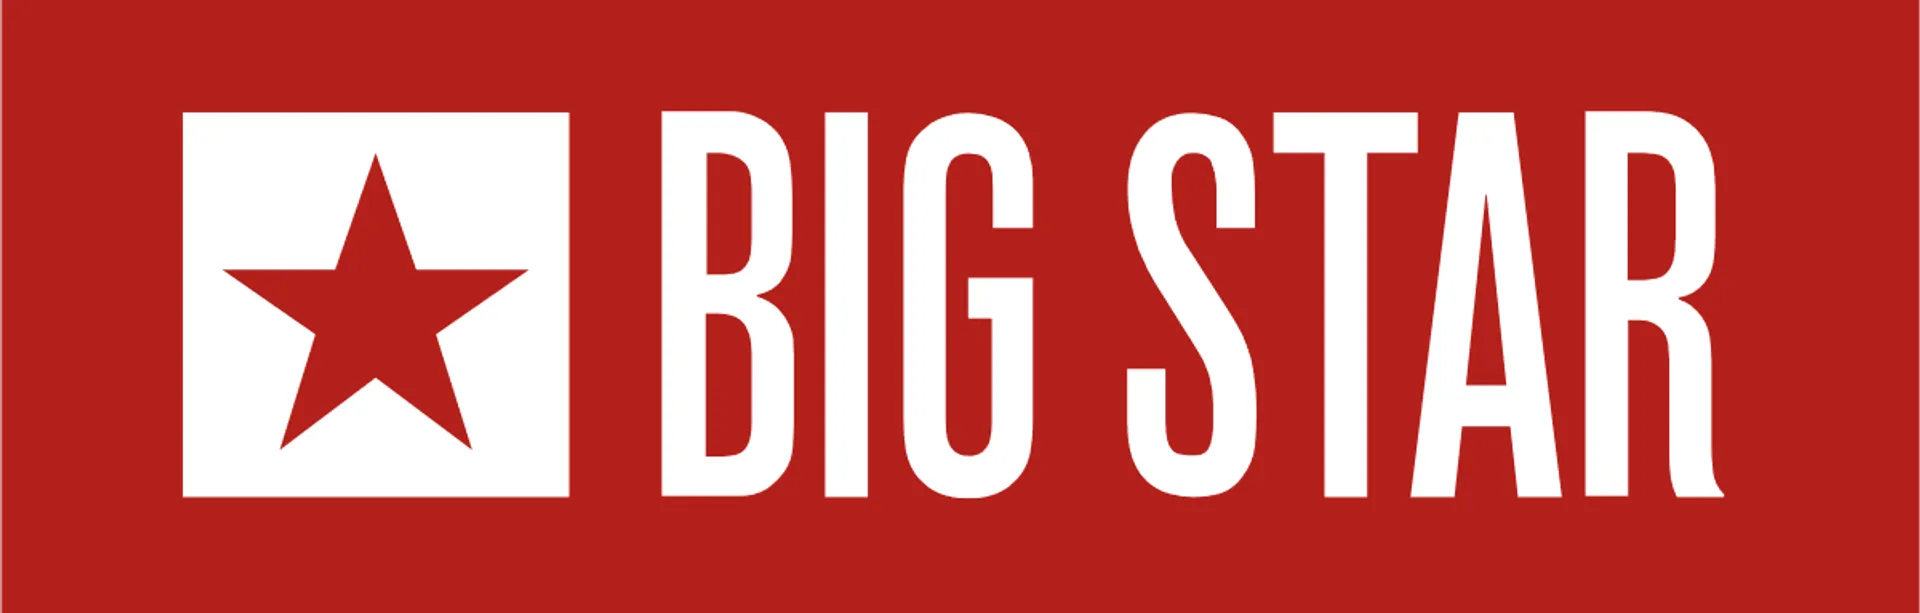 BIG STAR logo